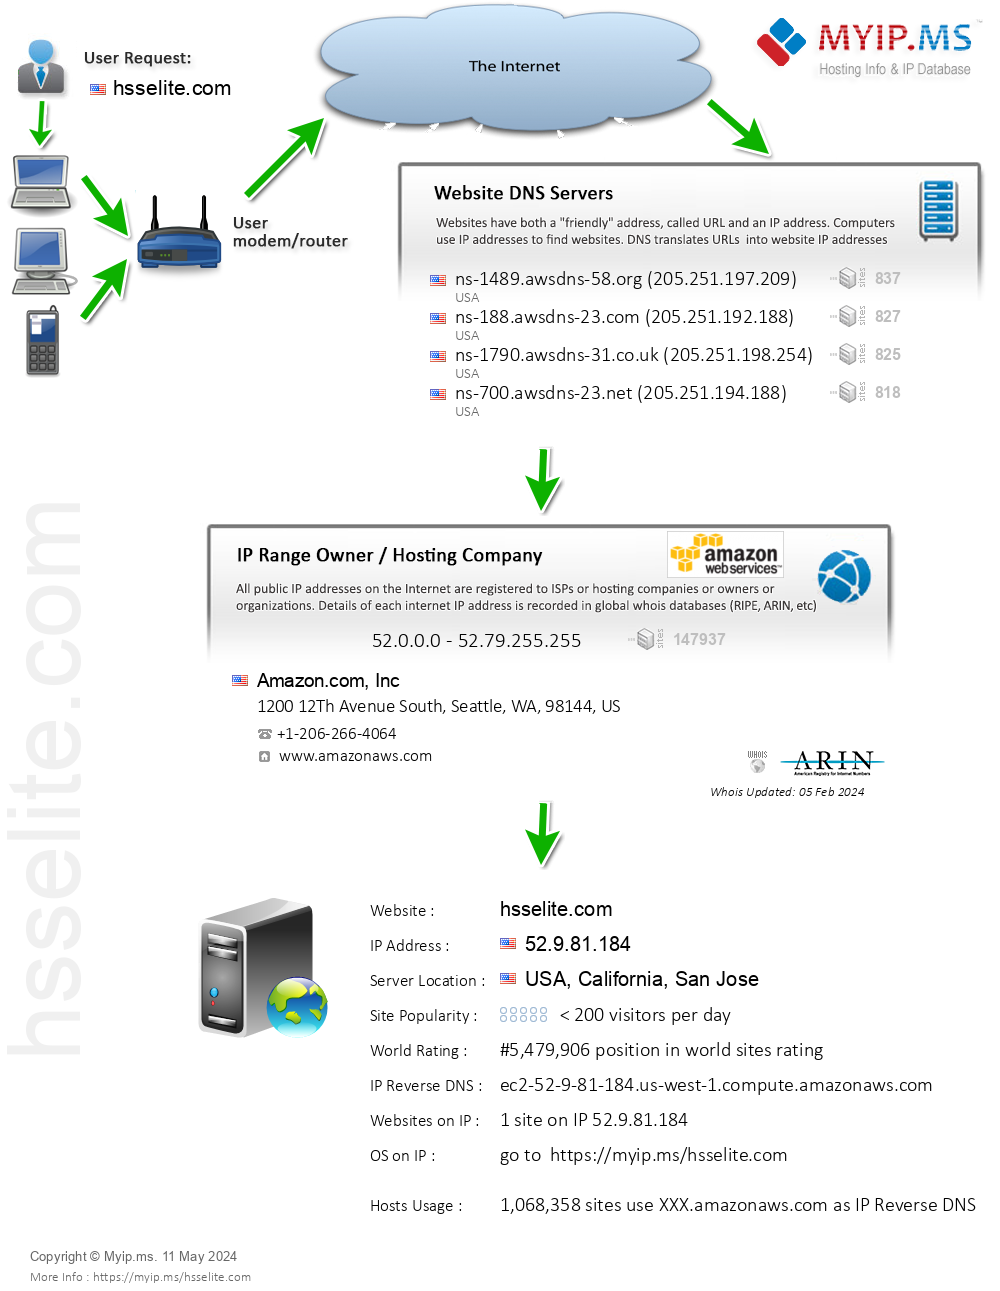 Hsselite.com - Website Hosting Visual IP Diagram